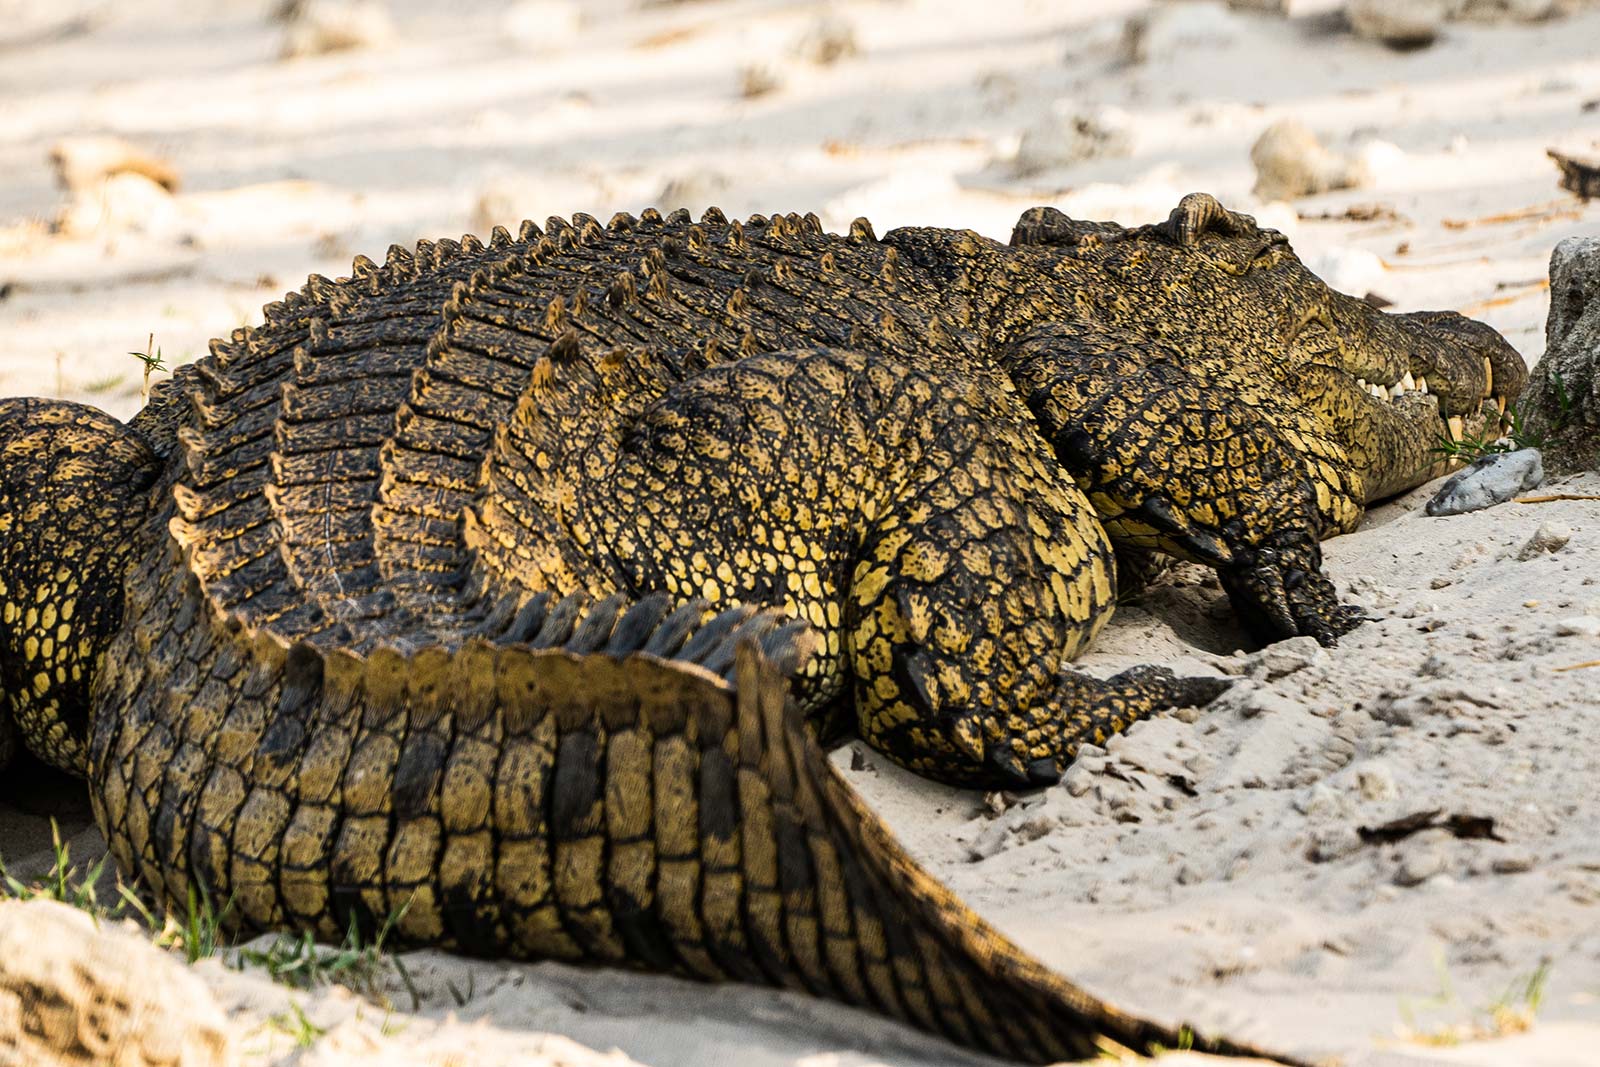 Crocodile resting in the river banks in Namibia, Africa. Kasenu Village, Namibia